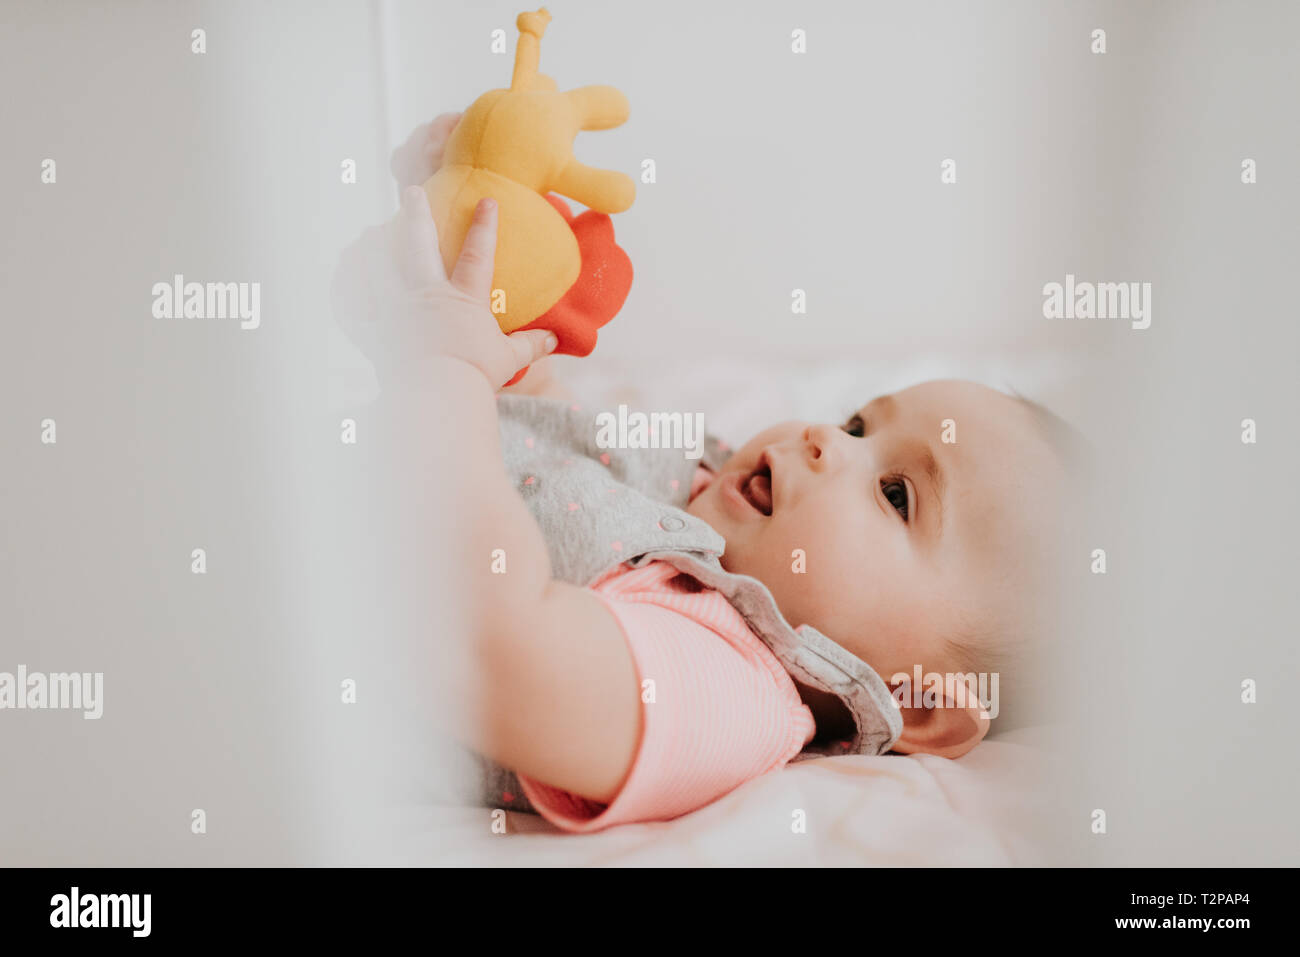 Baby in crib Stock Photo